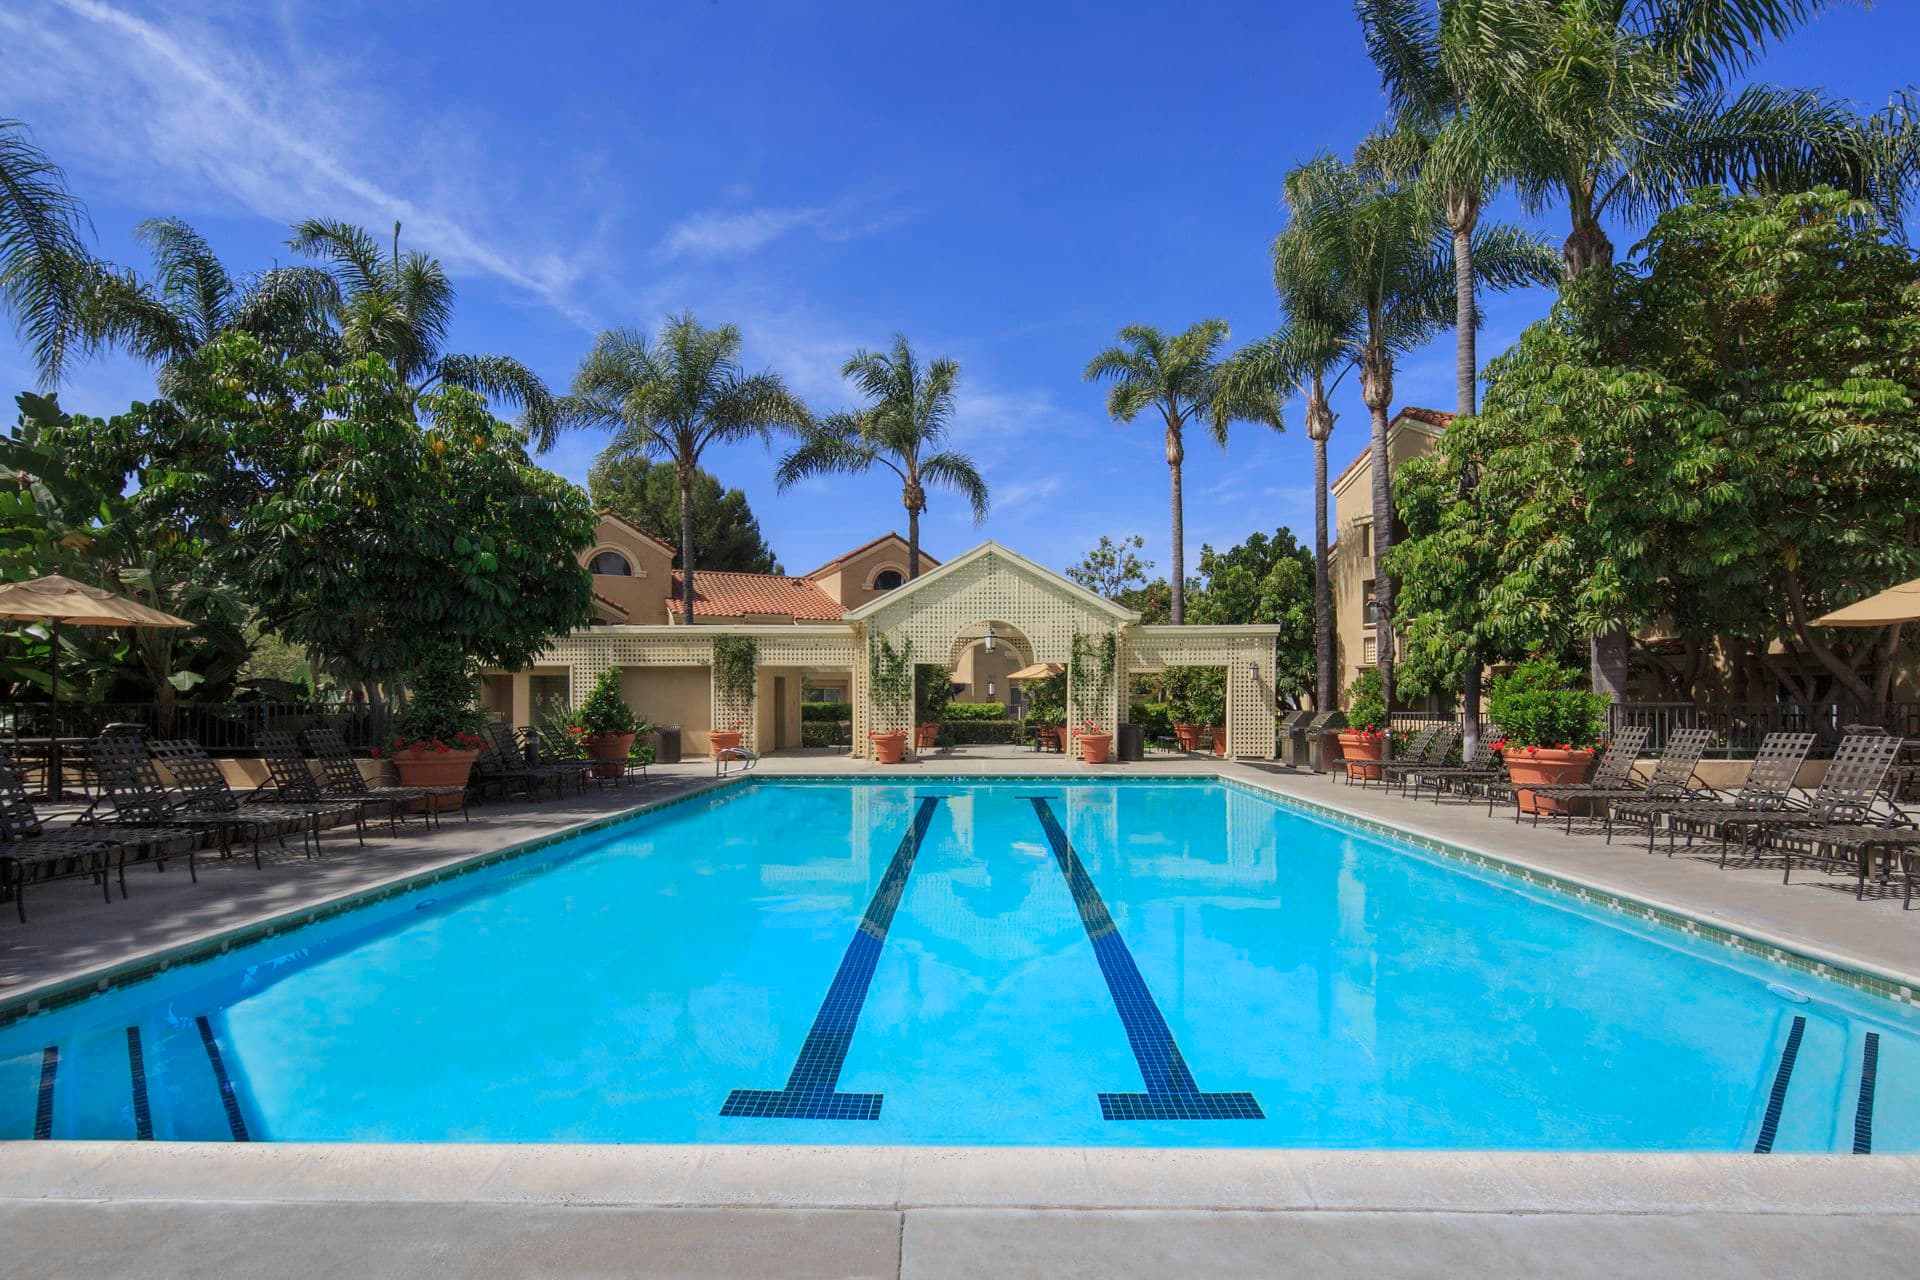 Pool view at San Leon Villa Apartment Homes in Irvine, CA.